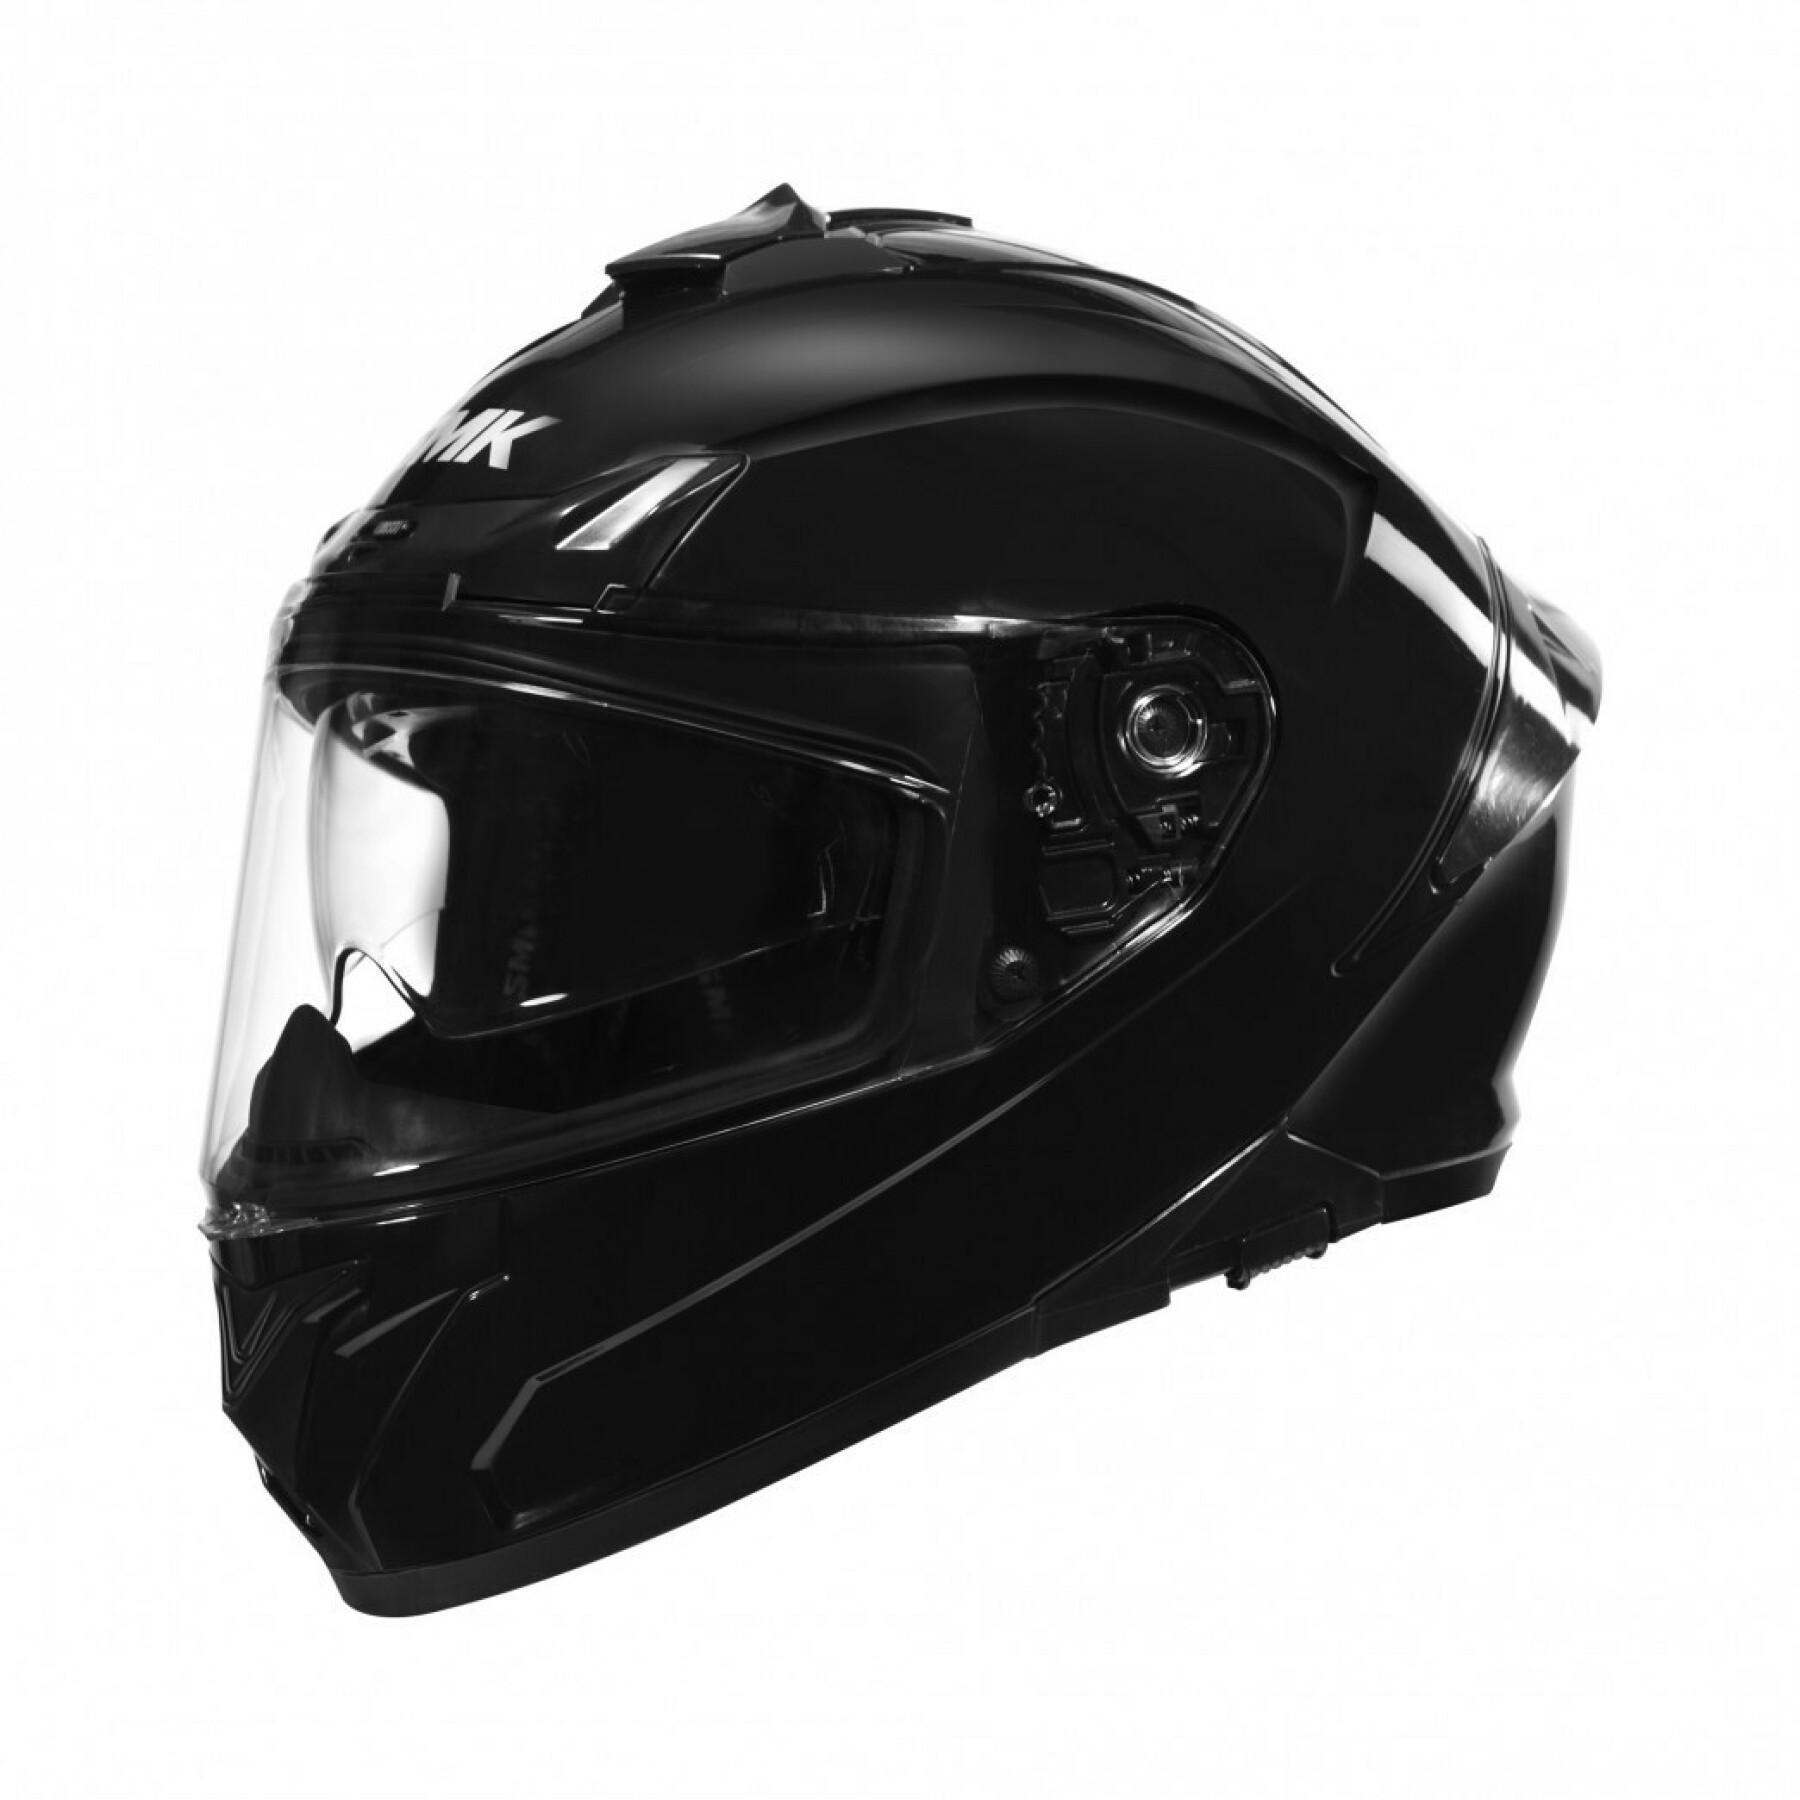 Full face motorcycle helmet SMK Typhoon